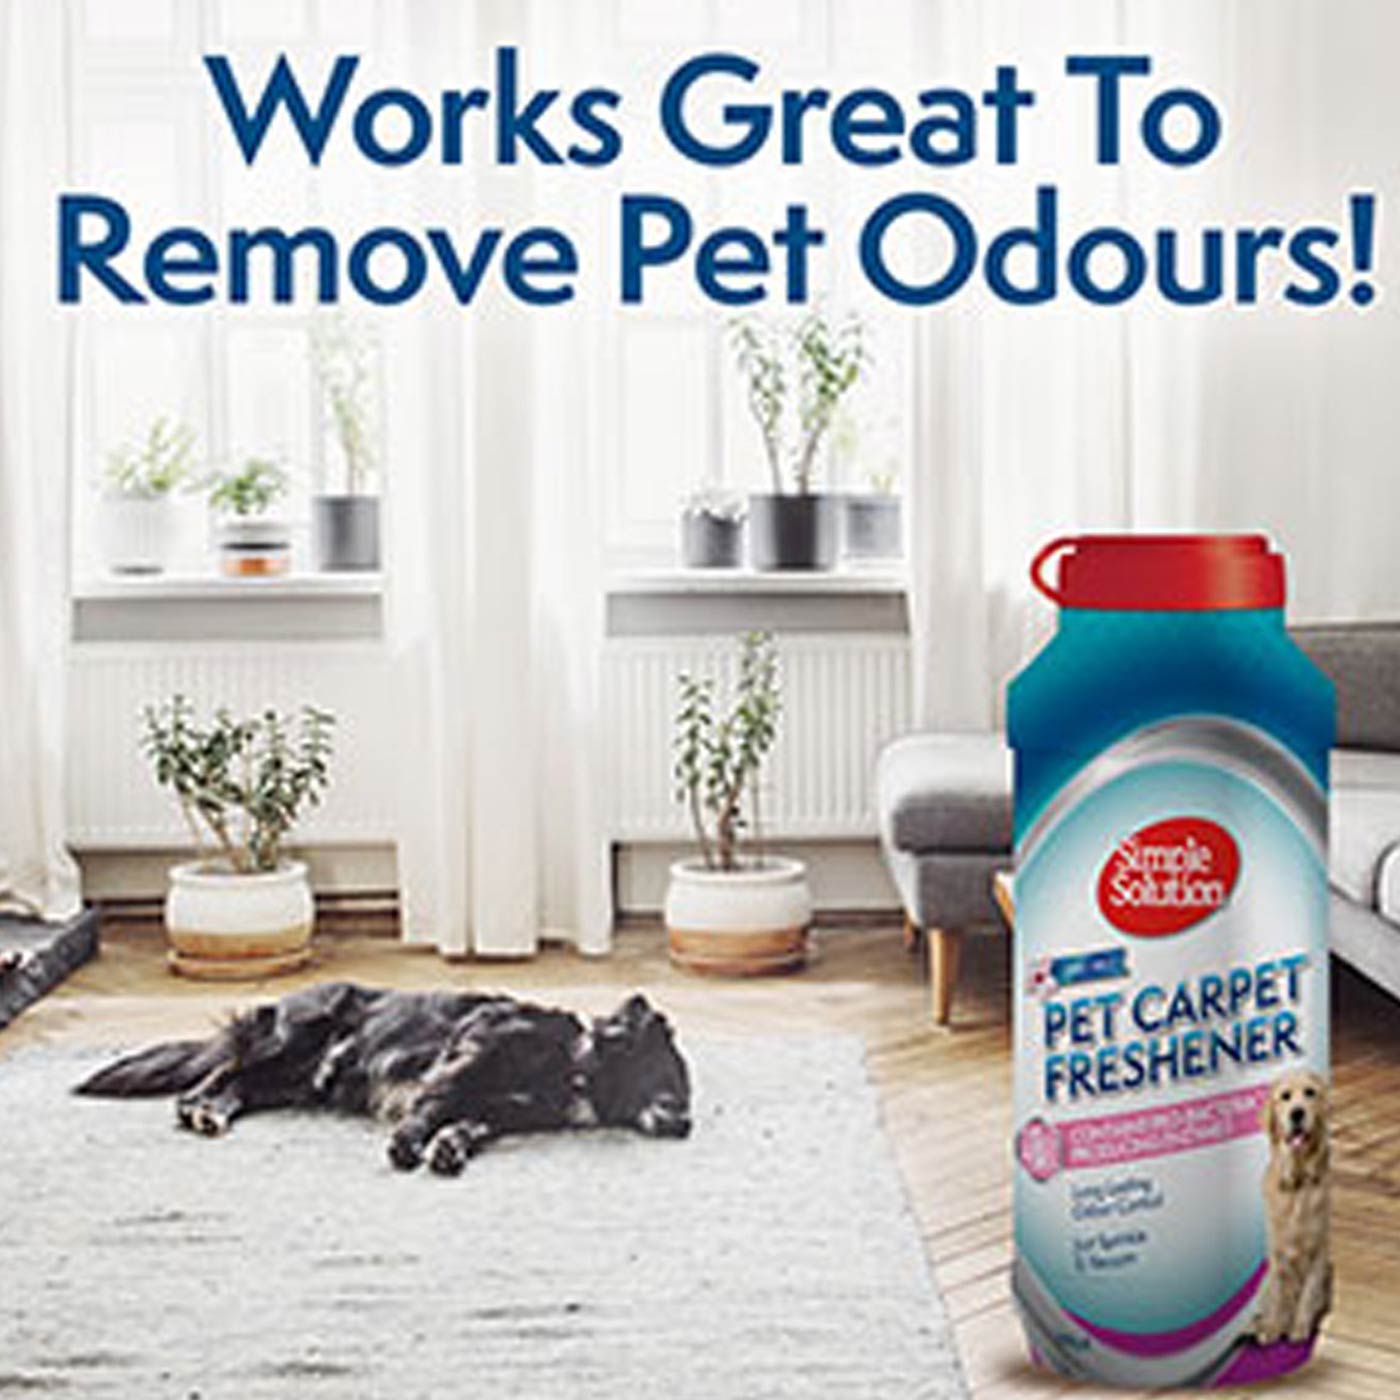 Simple Solution Pet Carpet Freshener